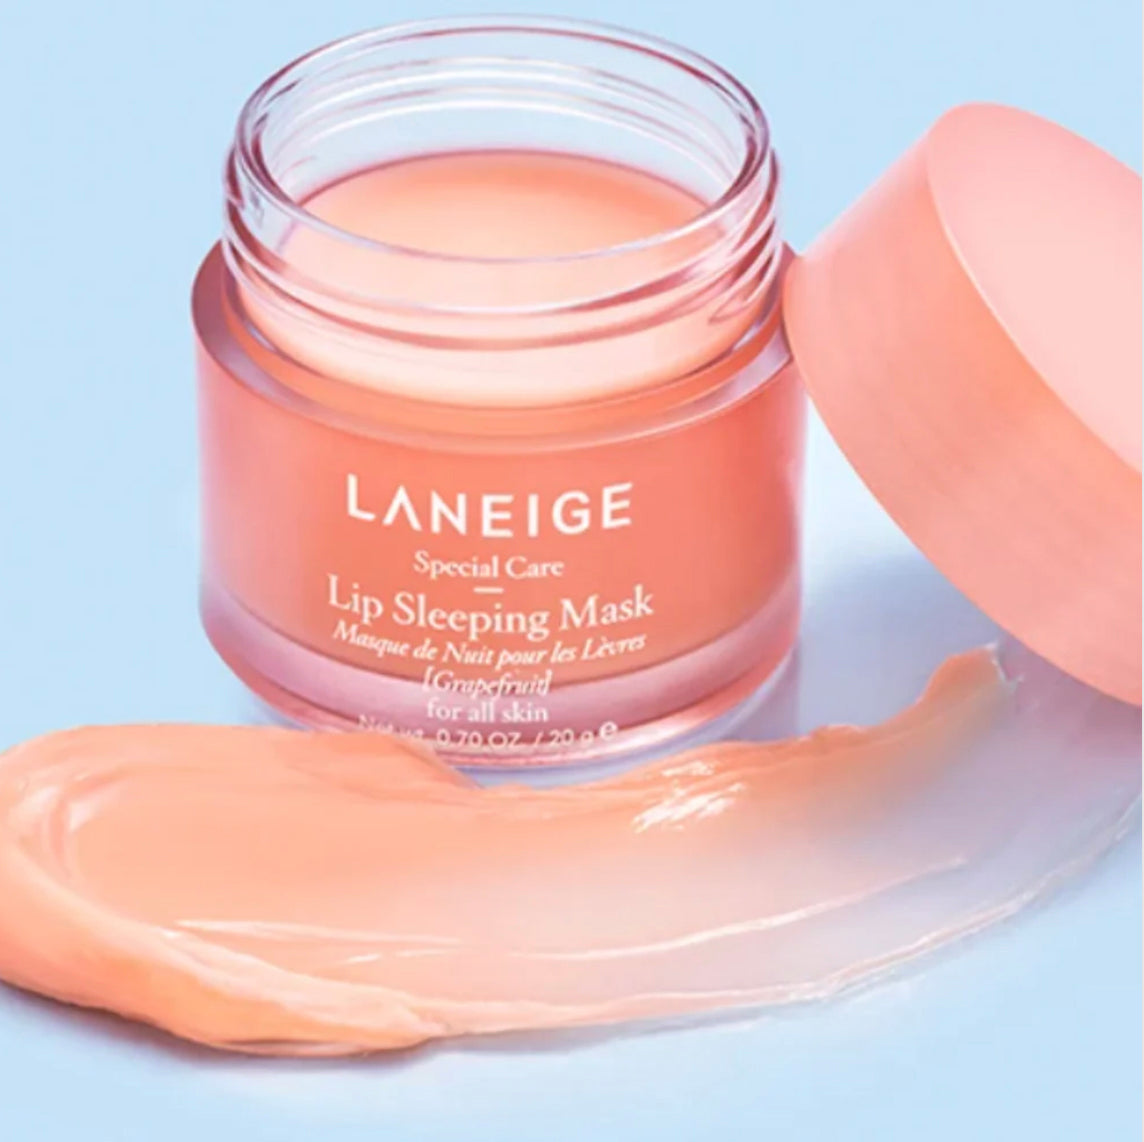 LANEIGE	Lip Sleeping Mask EX, Grapefruite, 20g